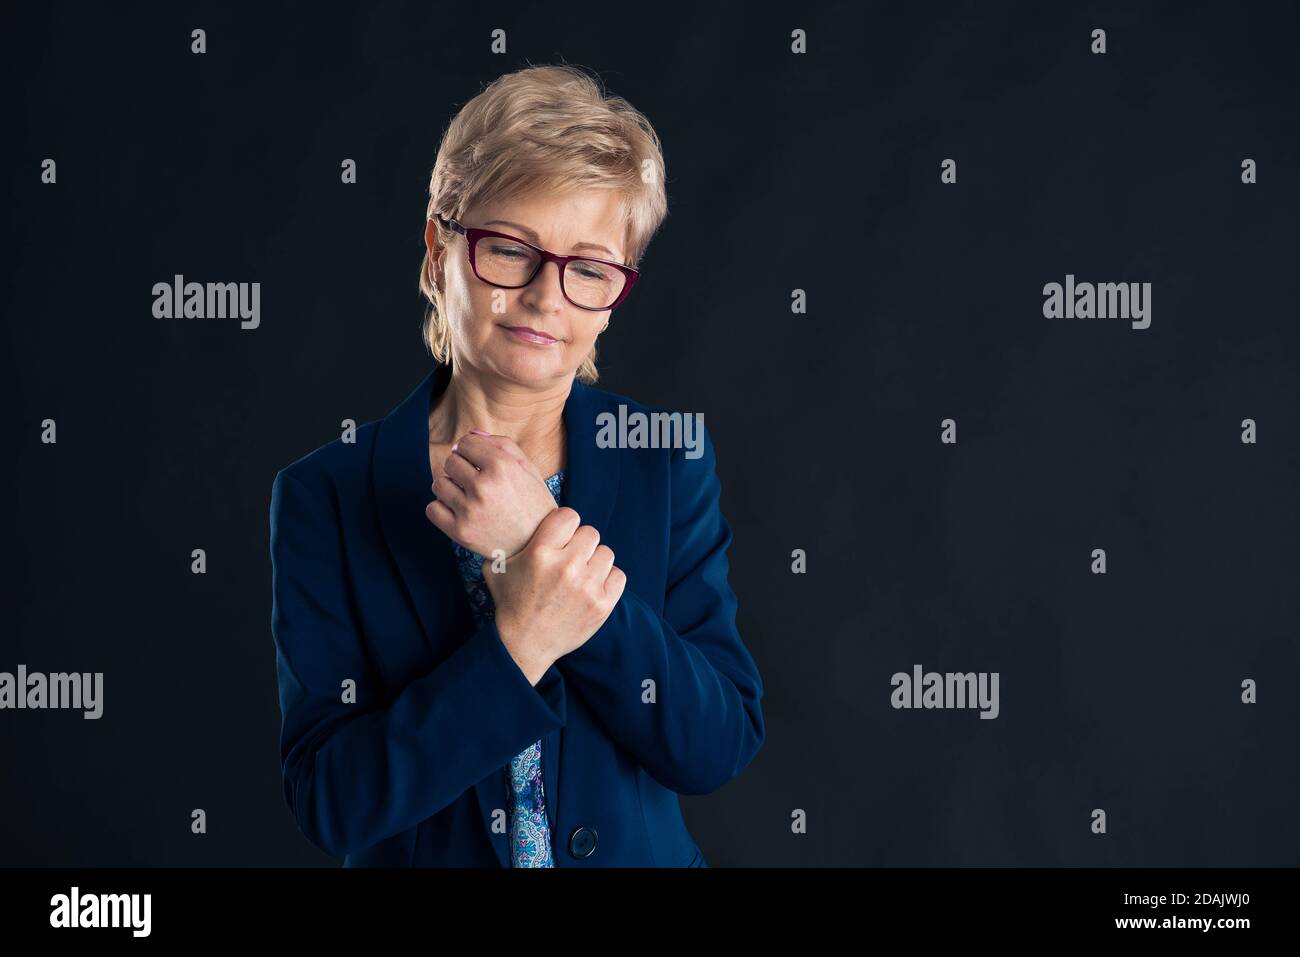 Portrait of an older businesswoman having wrist joint pain wearing a blue jaket on dark background Stock Photo